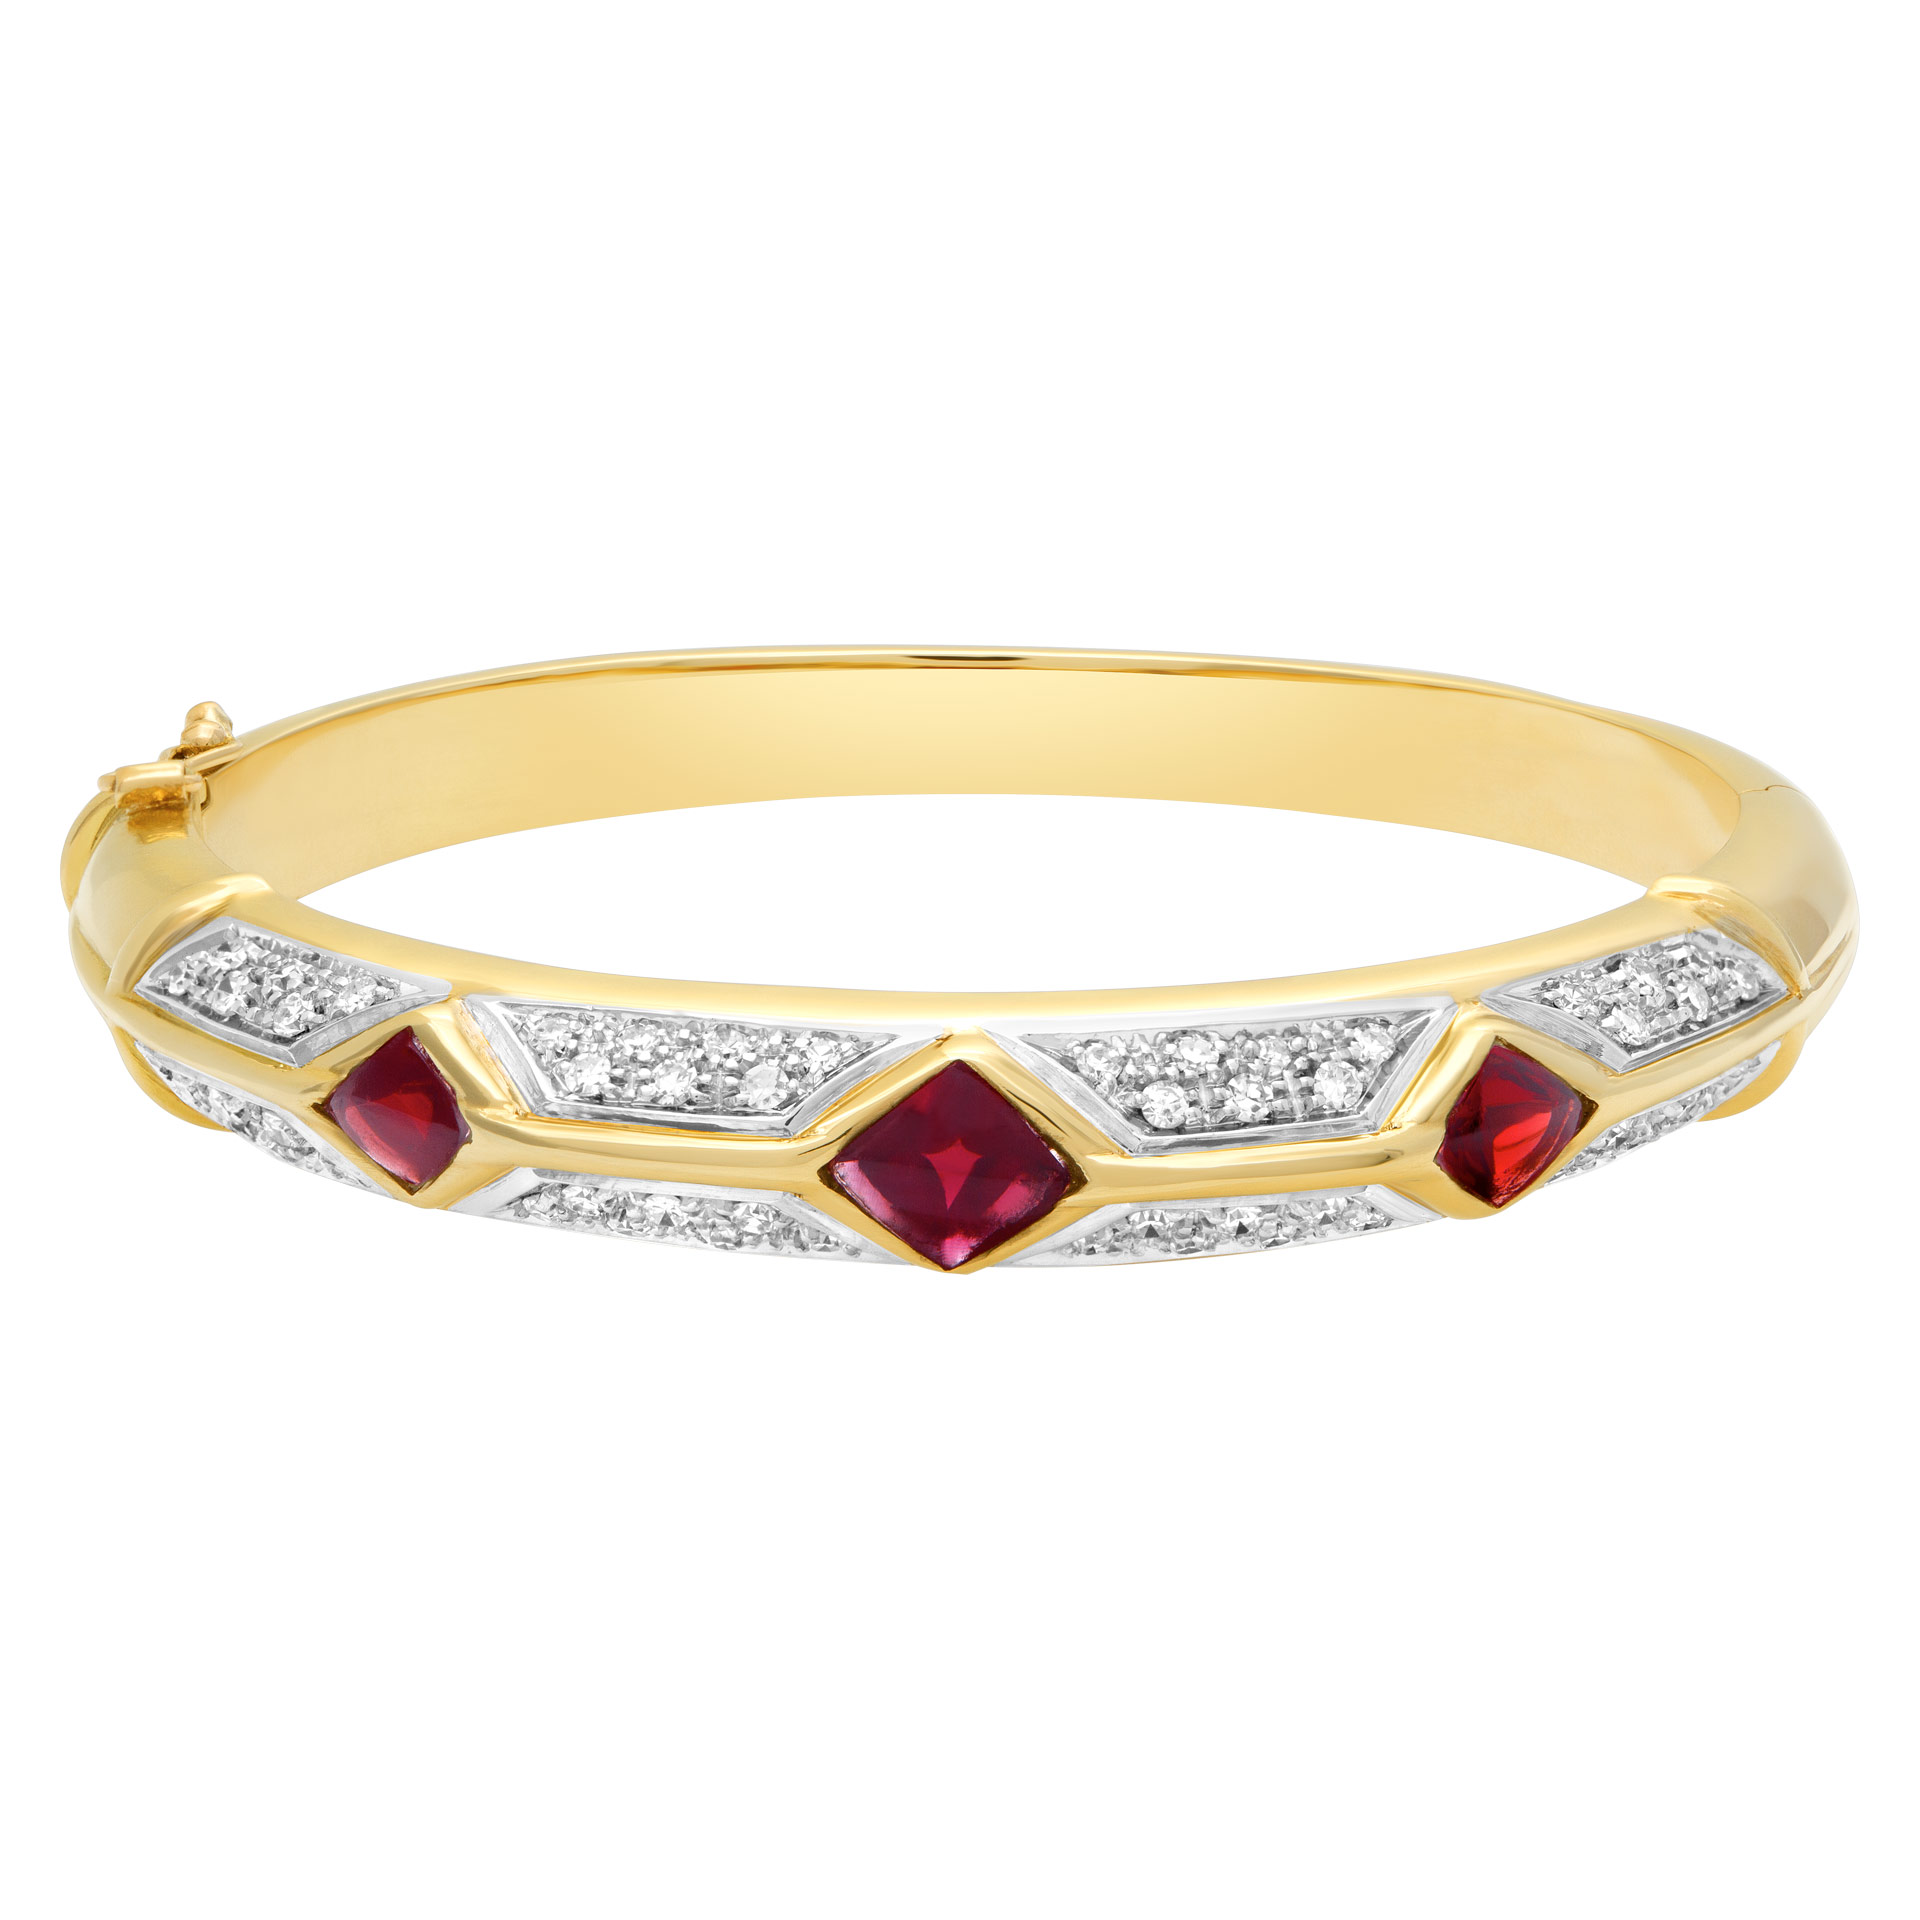 Diamond bangle in 18k with 1 carat in round brilliant cut G-H color, VS clarity diamonds